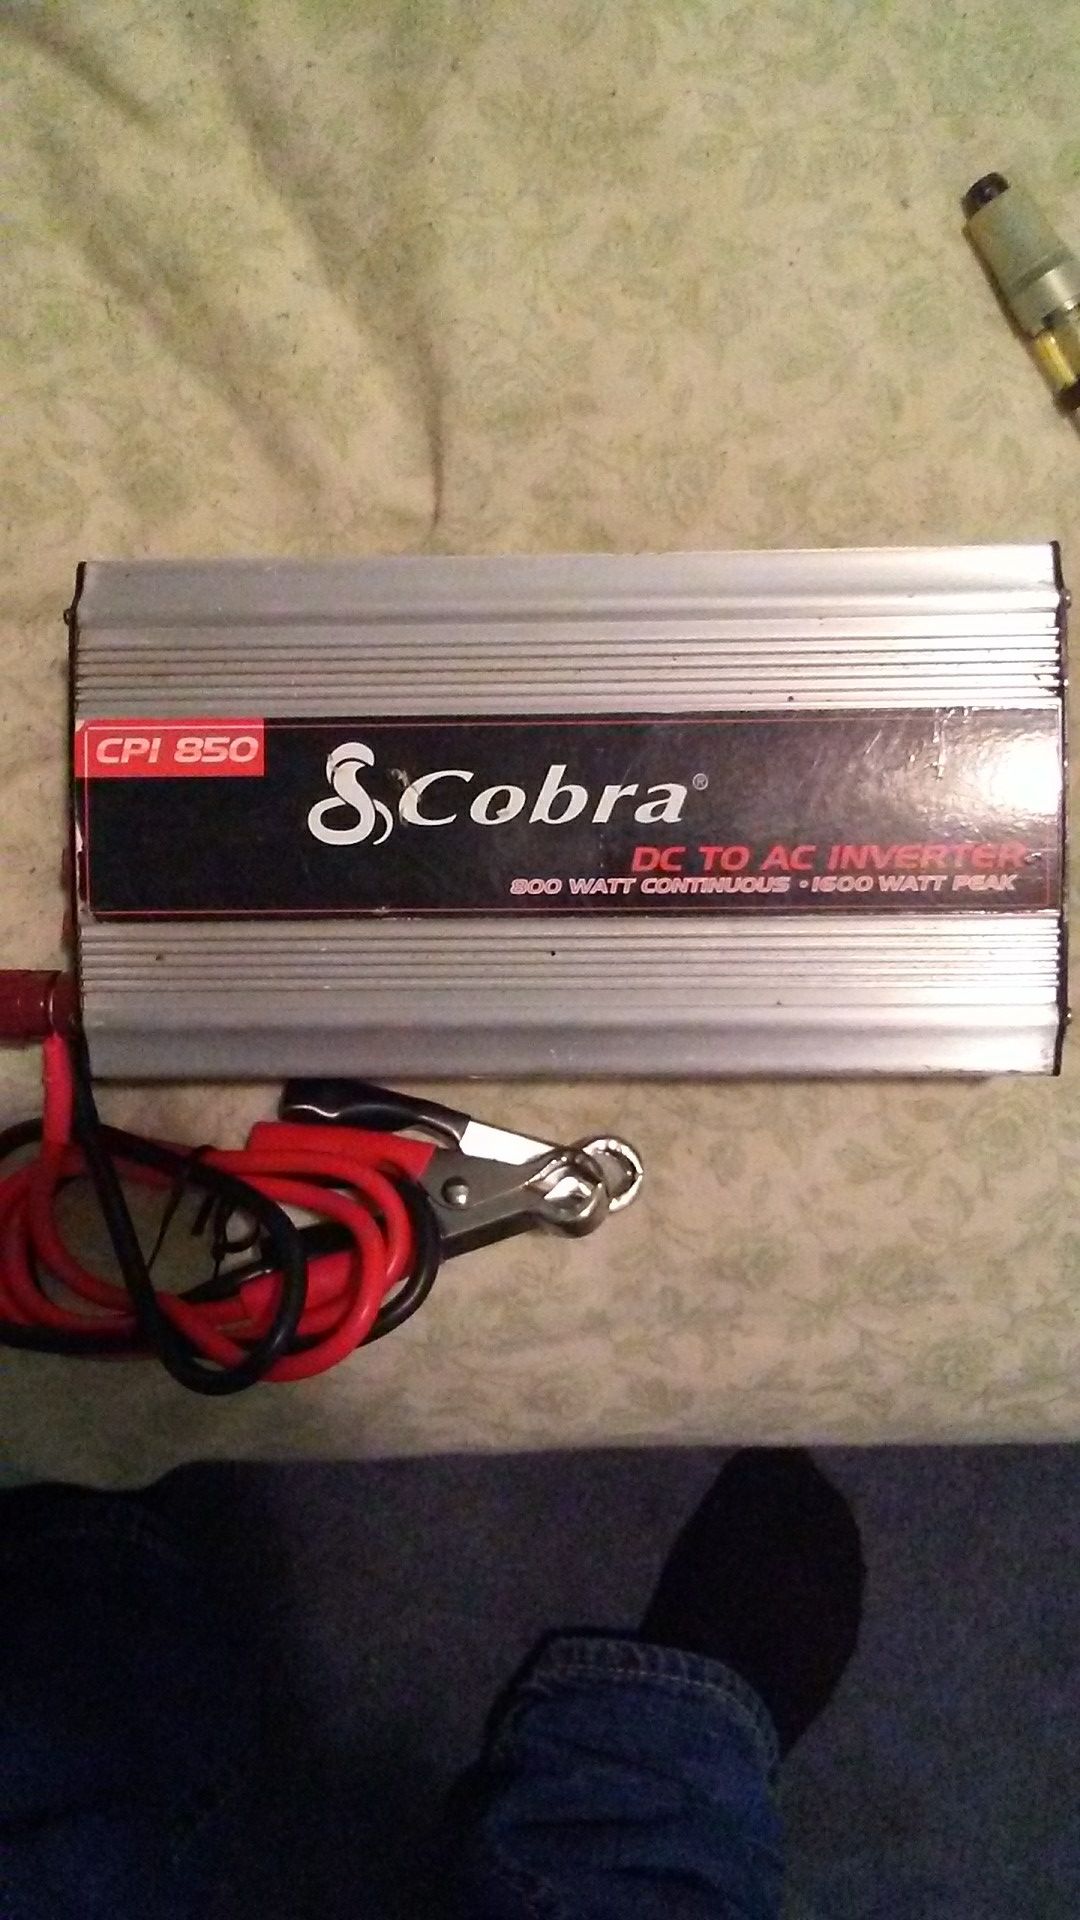 Cobra CPI850 DC TO AC INVERTER